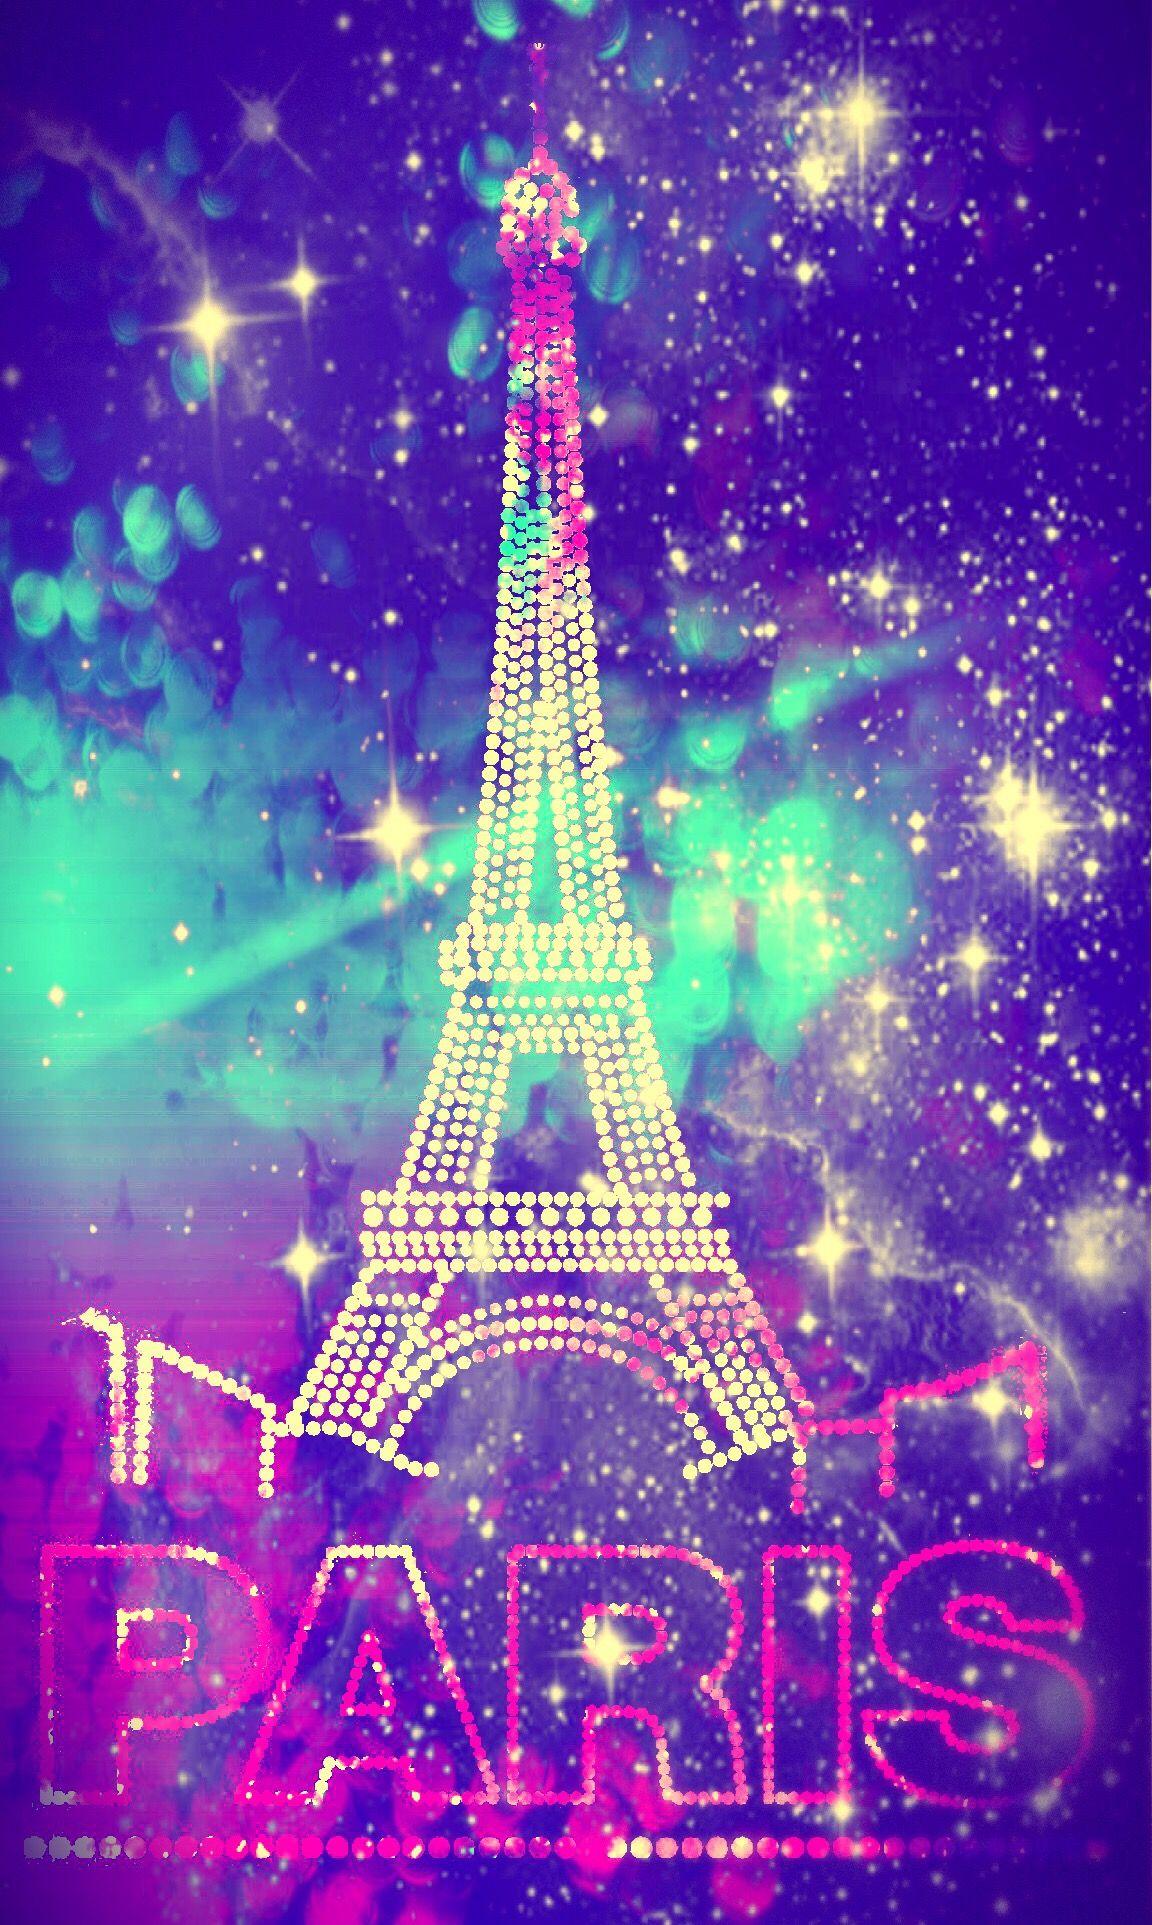 Glitter Paris Wallpapers - Top Free Glitter Paris Backgrounds ...